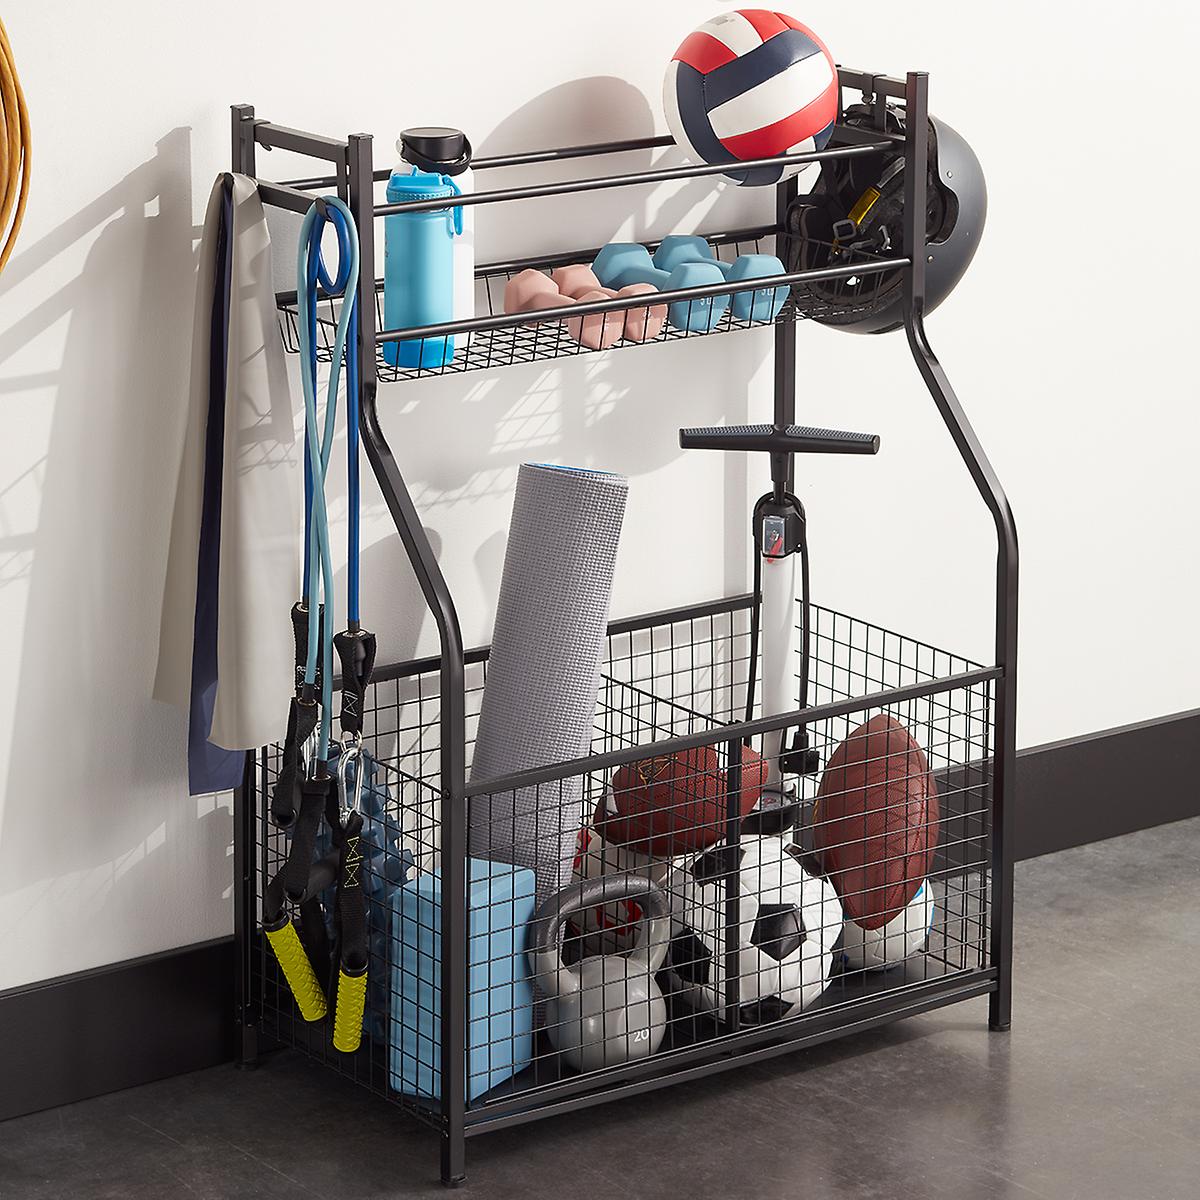 MYTHINGLOGIC Garage Storage System Garage Organizer with Baskets and Hooks  Sports Equipment Storage Organizer Rack for Sports Gear Toys Garage Ball  Storage for Indoor Outdoor Use 